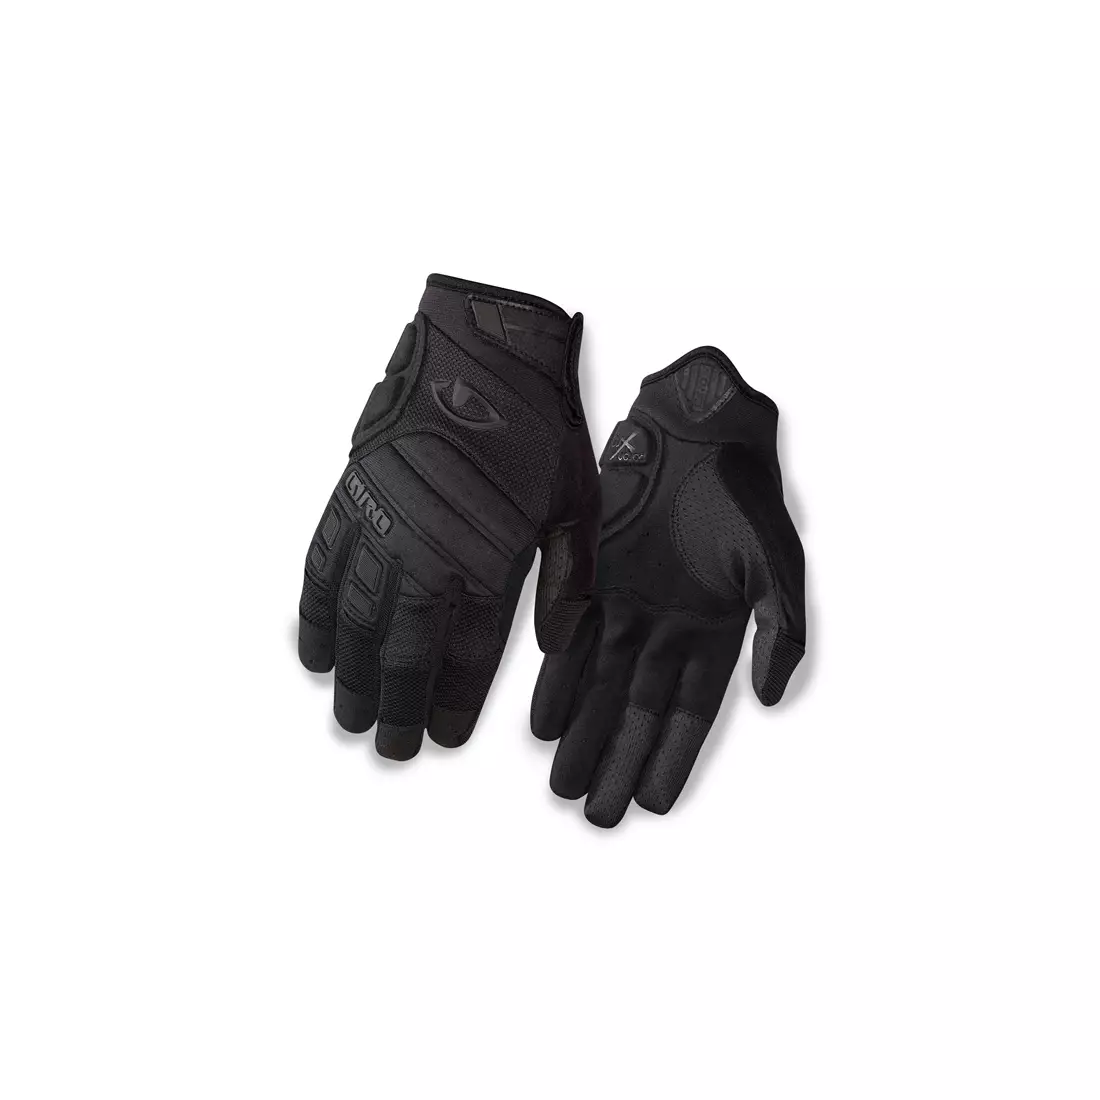 GIRO men's bicycle gloves xen black GR-7068670